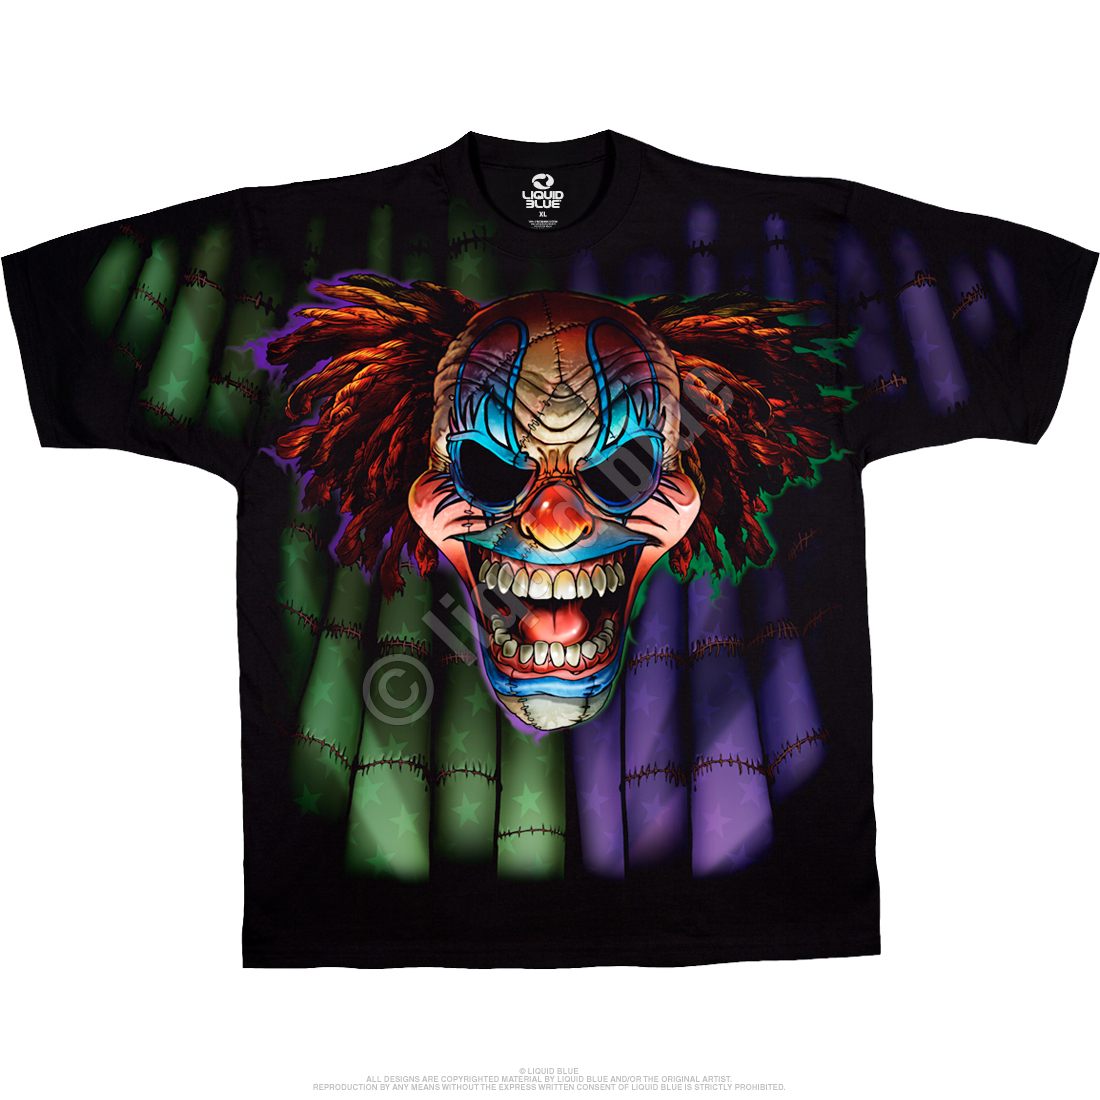 Evil Clown Street Life T-shirt